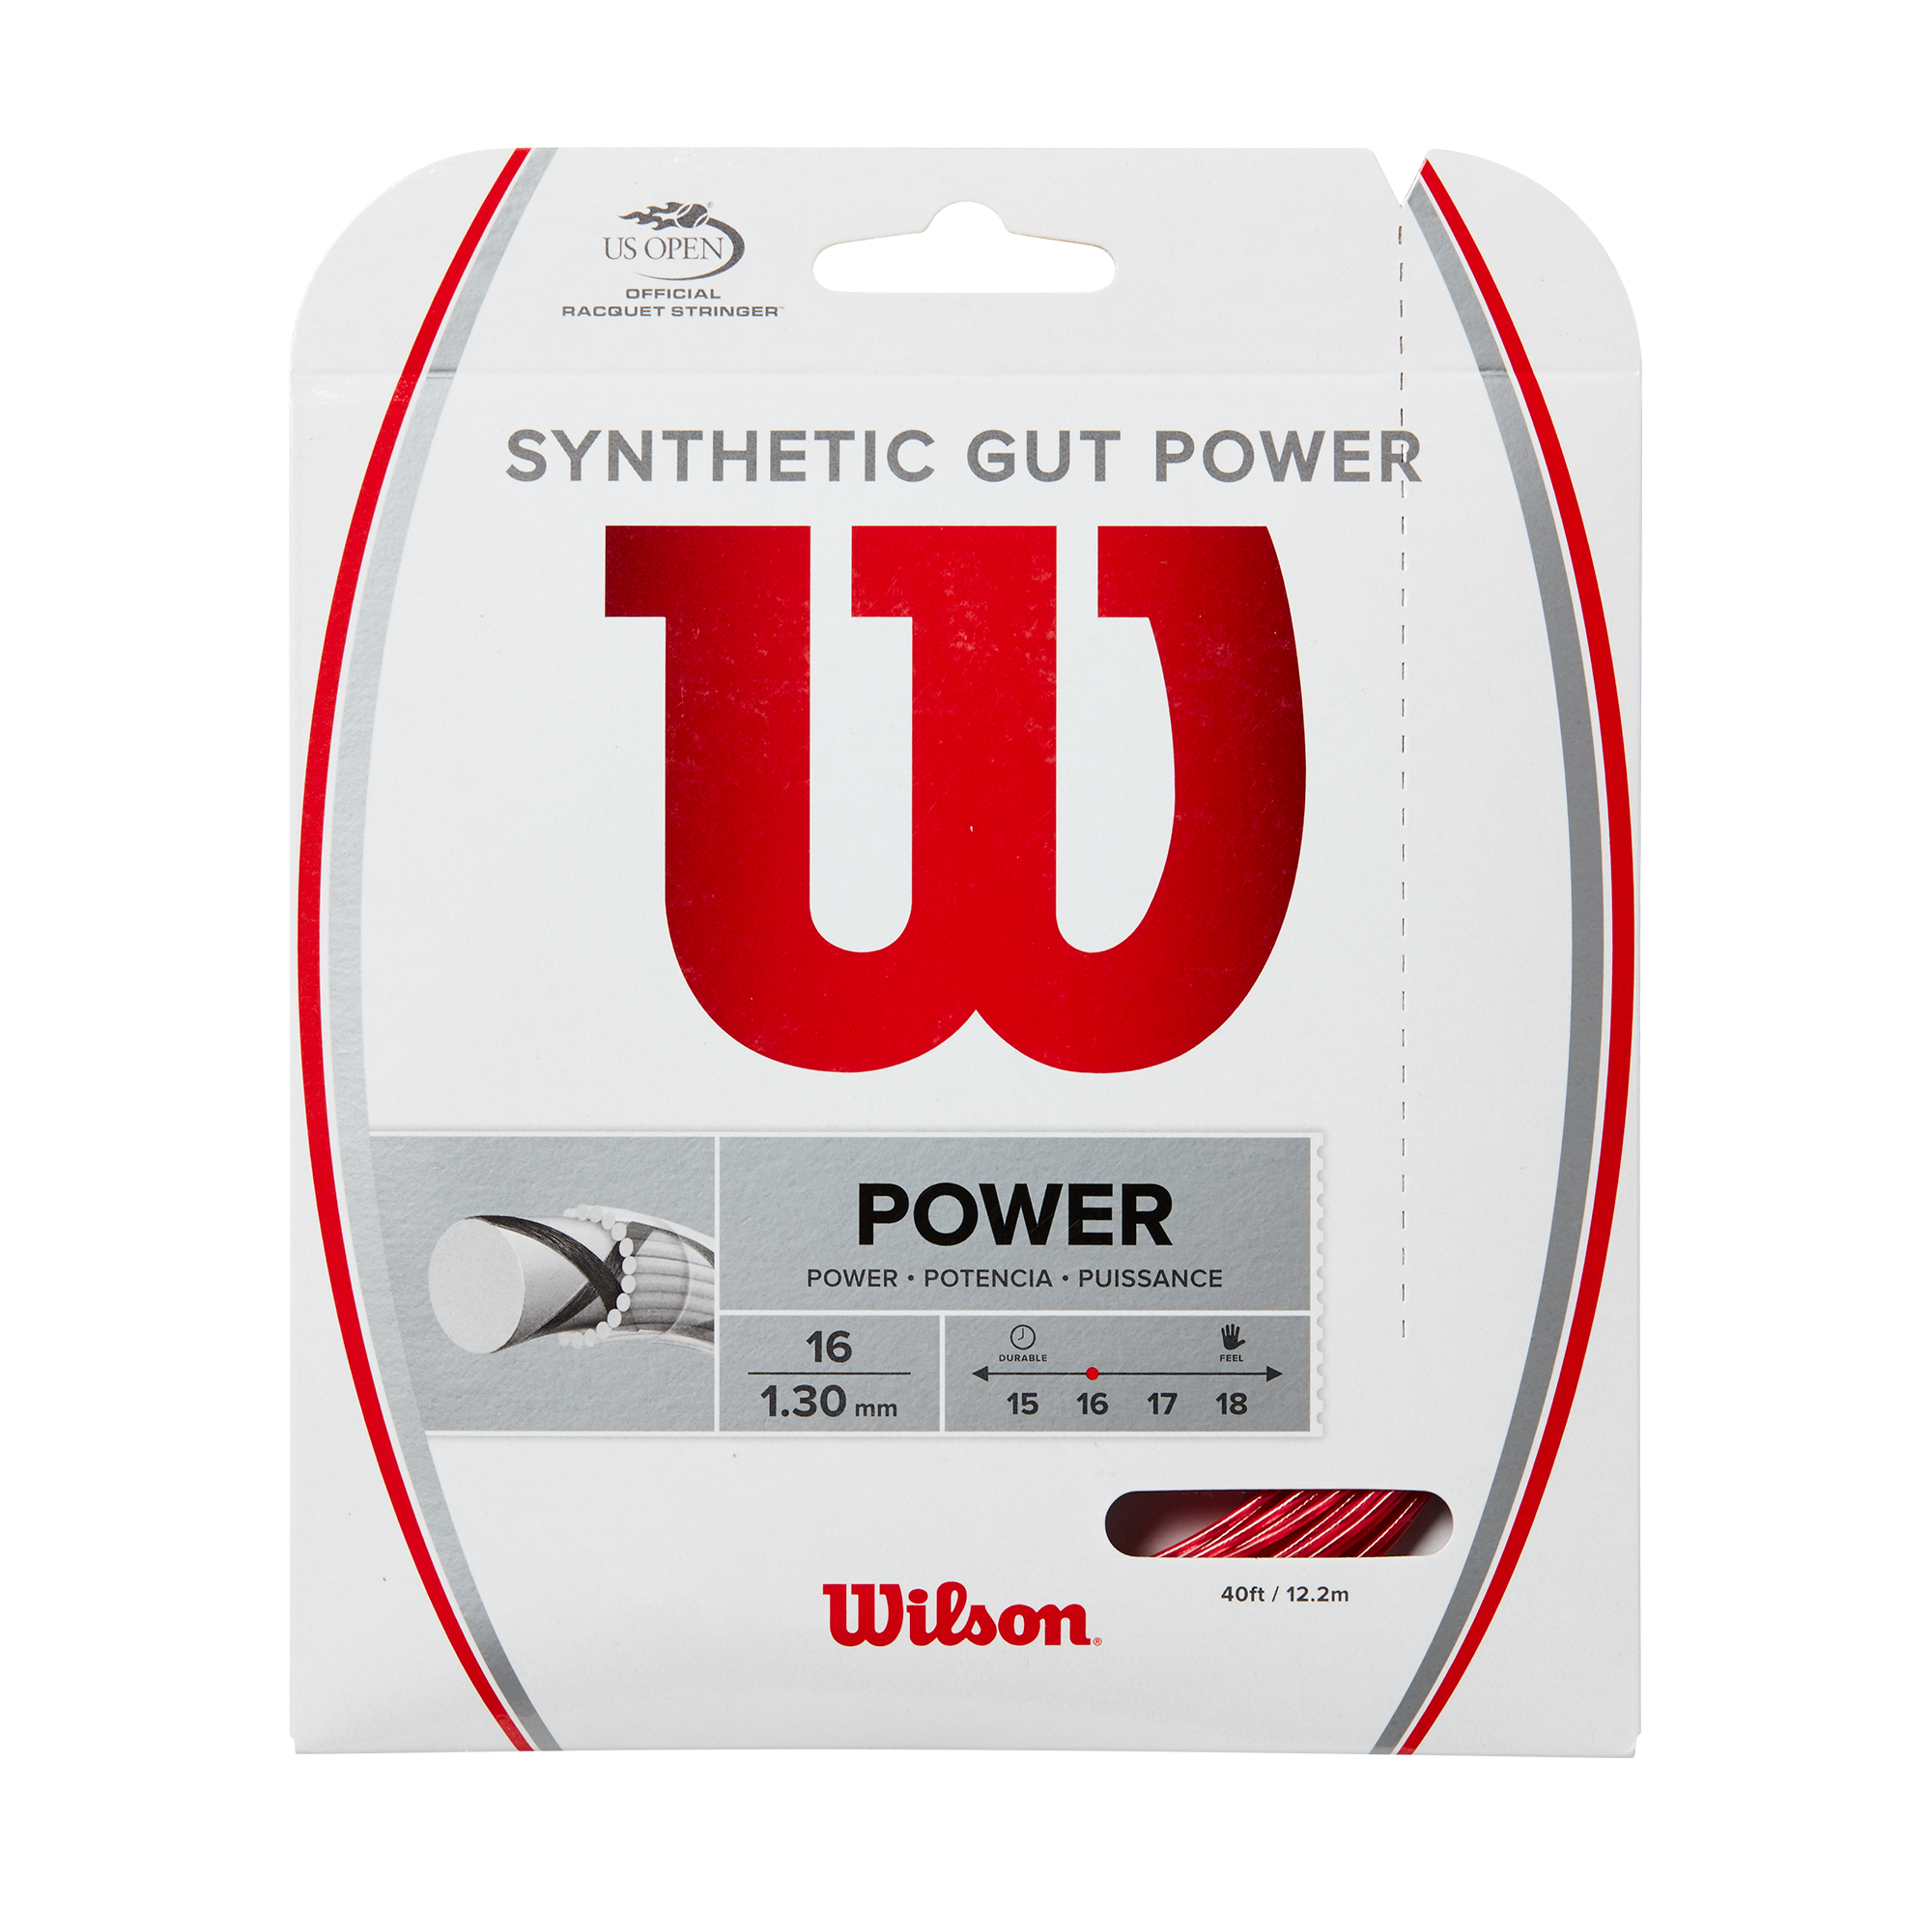 WILSON SYNTHETIC GUT POWER 16 TENNIS STRING - SET